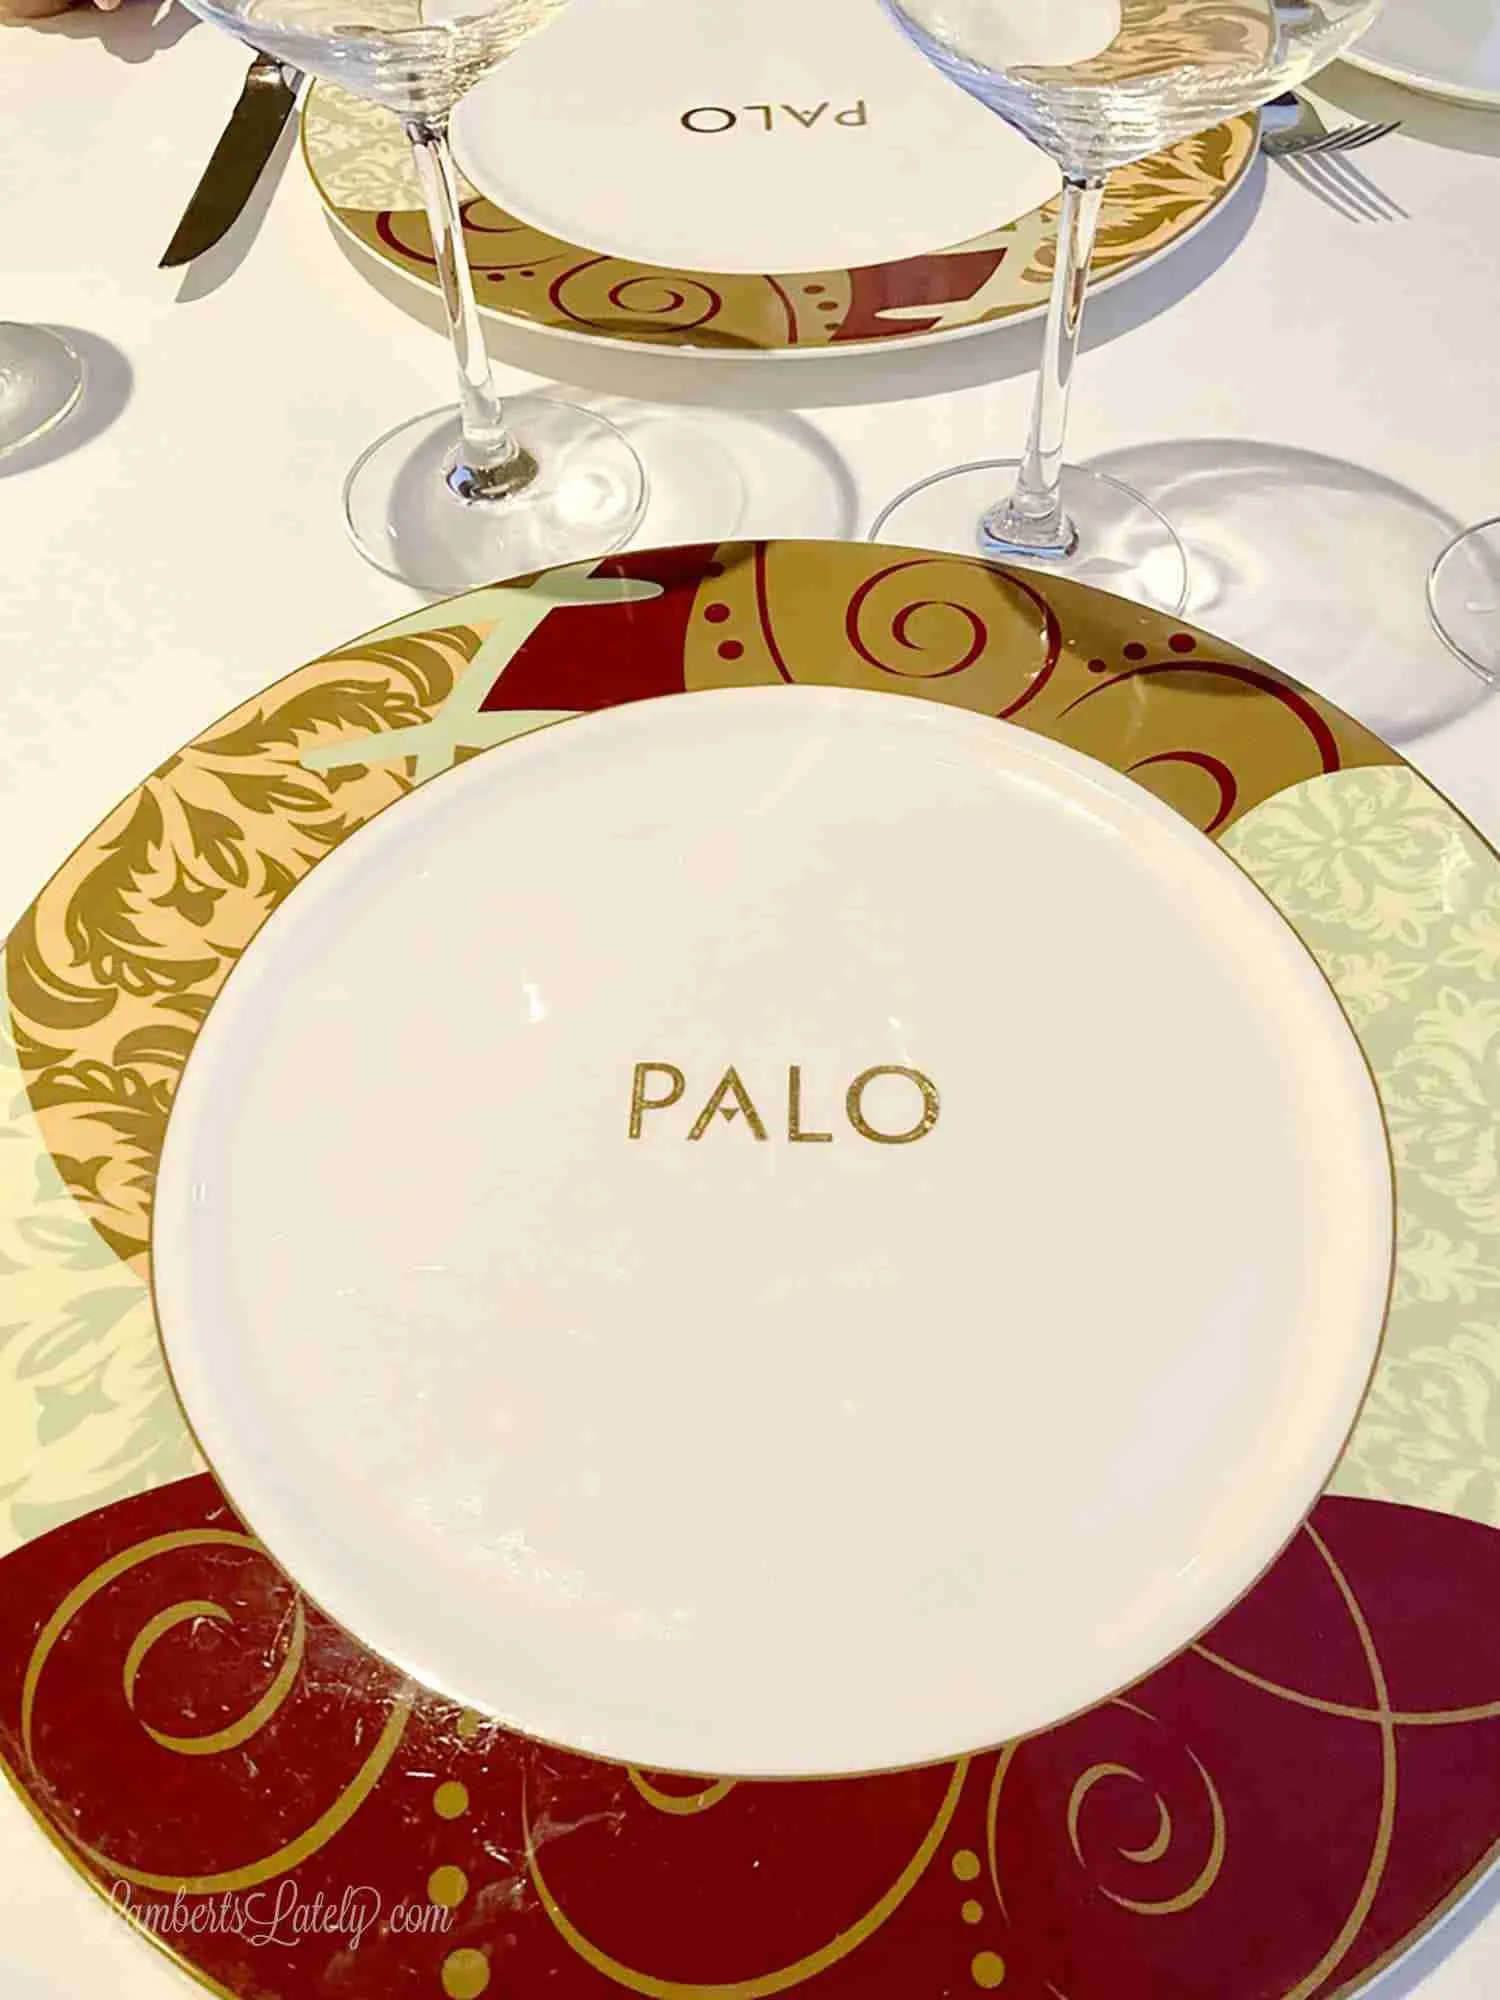 Disney Wonder Palo plate